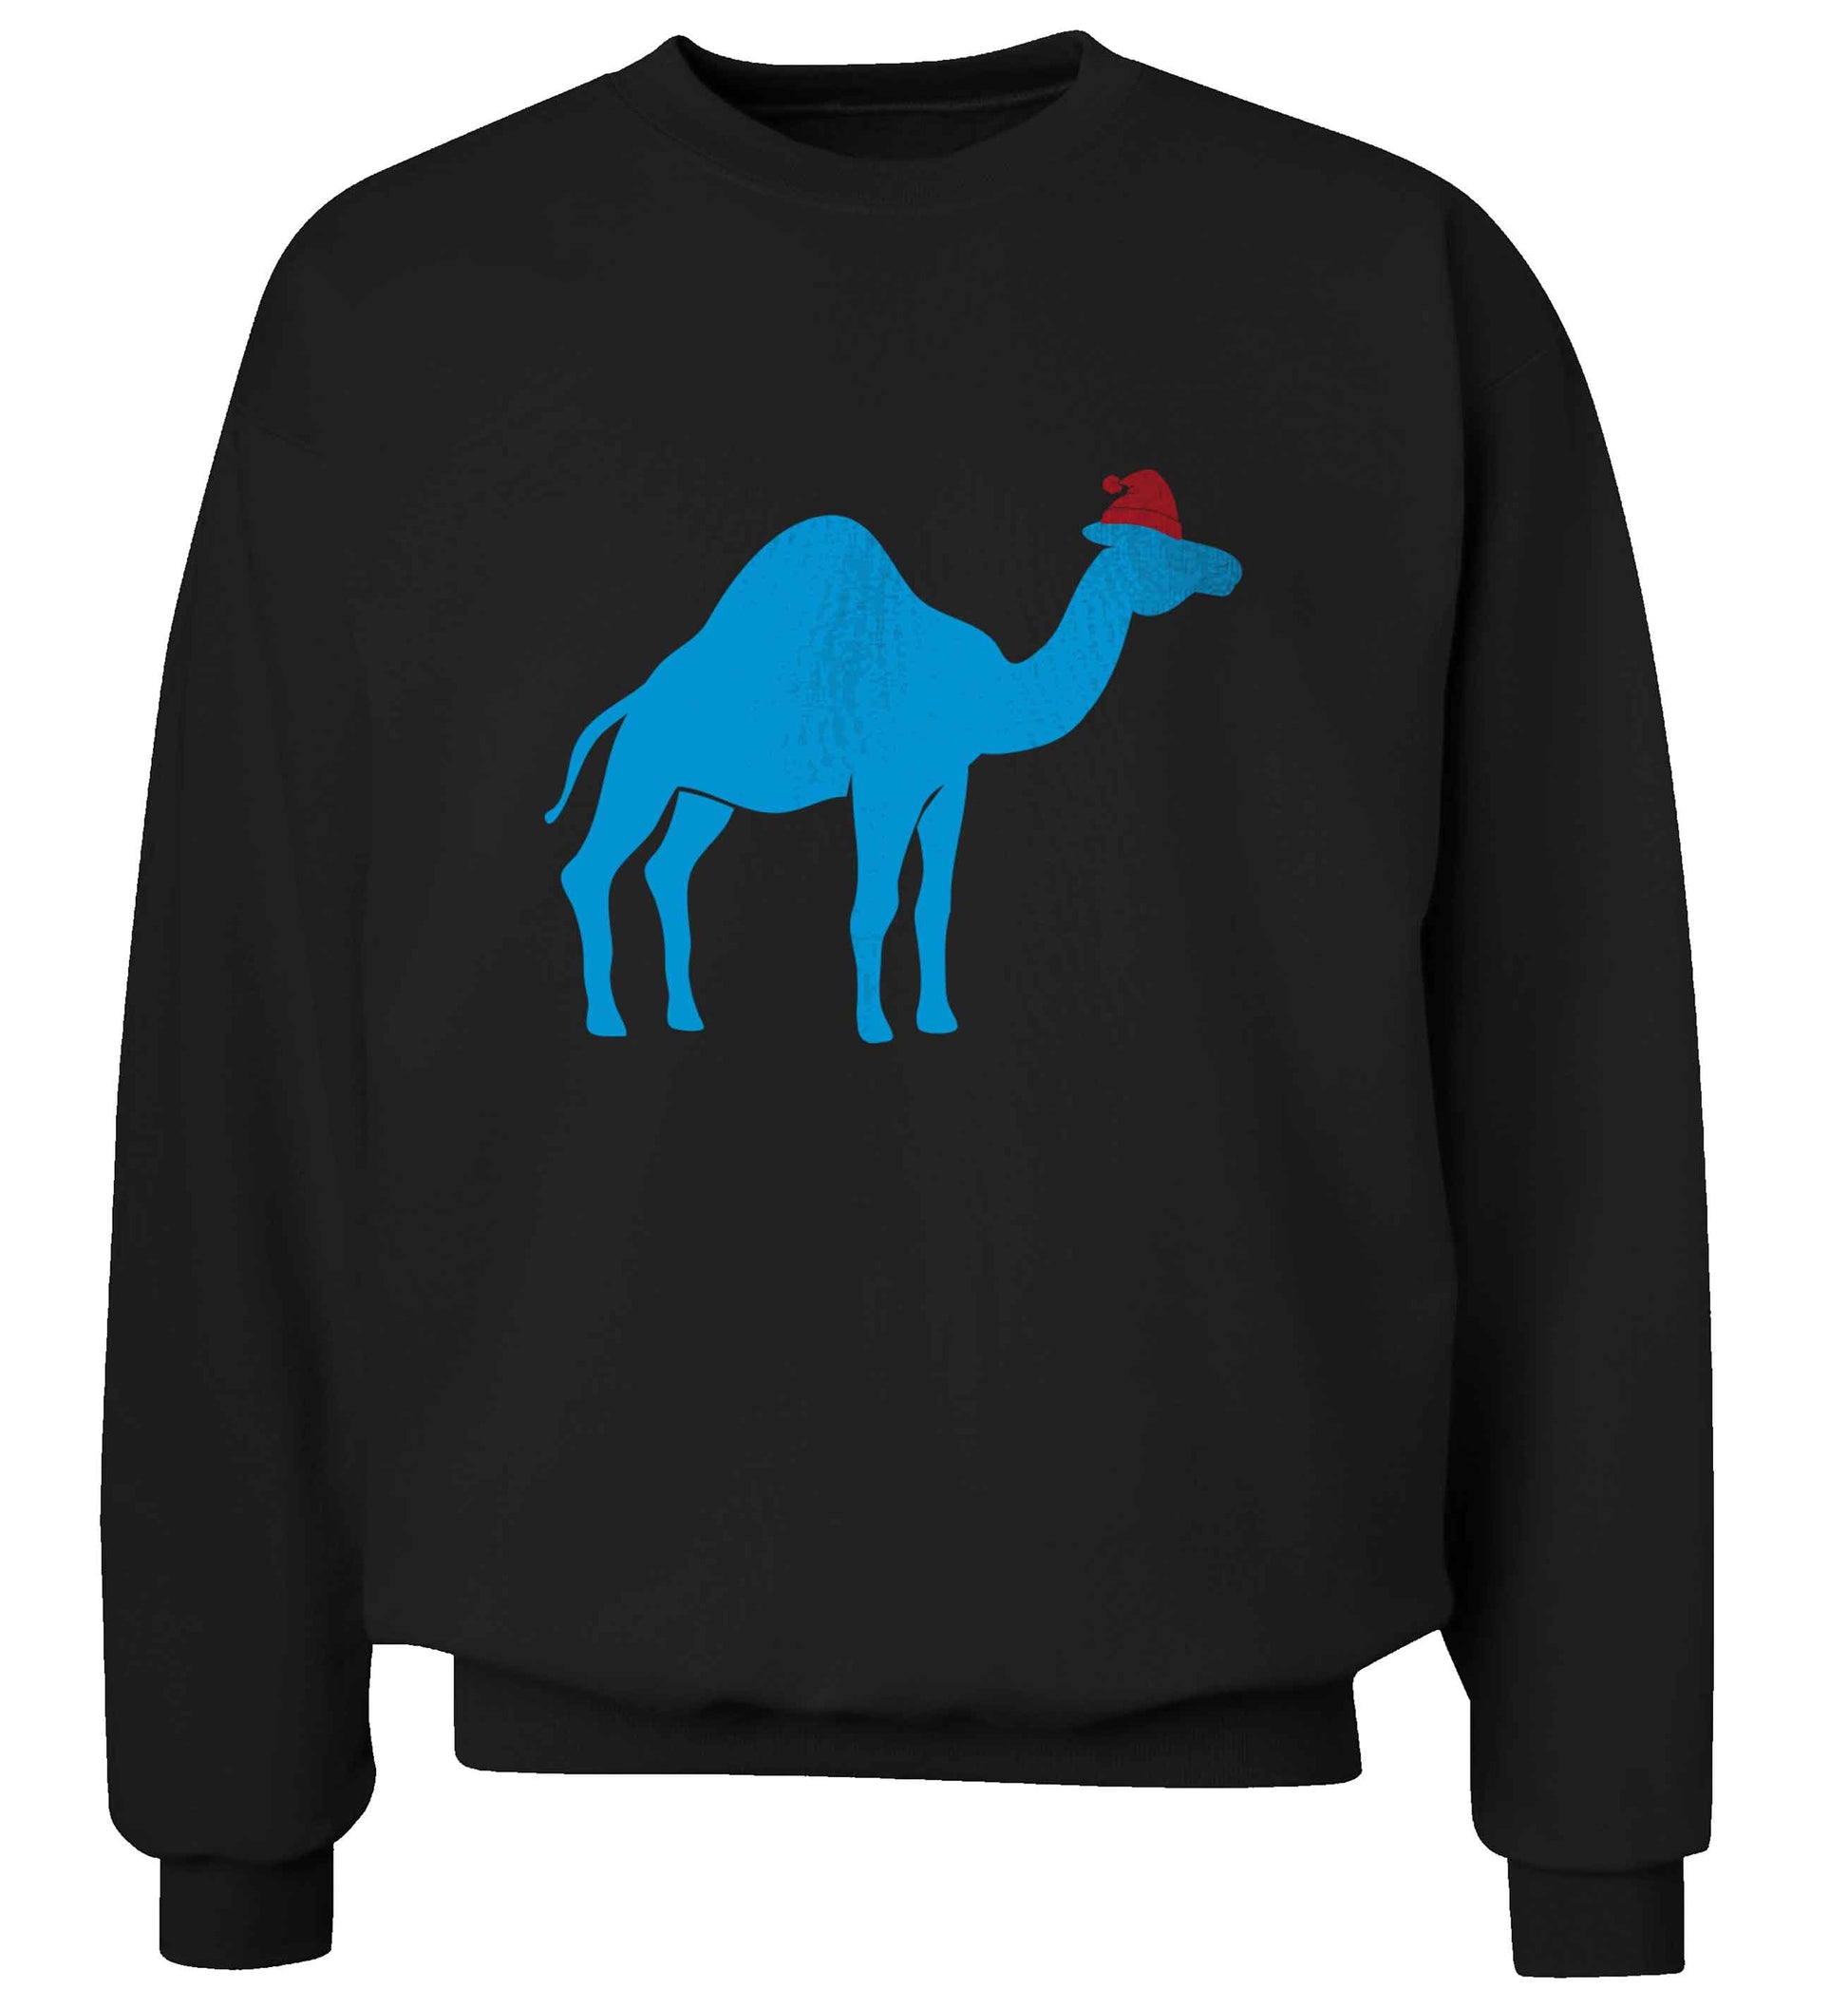 Blue camel santa adult's unisex black sweater 2XL